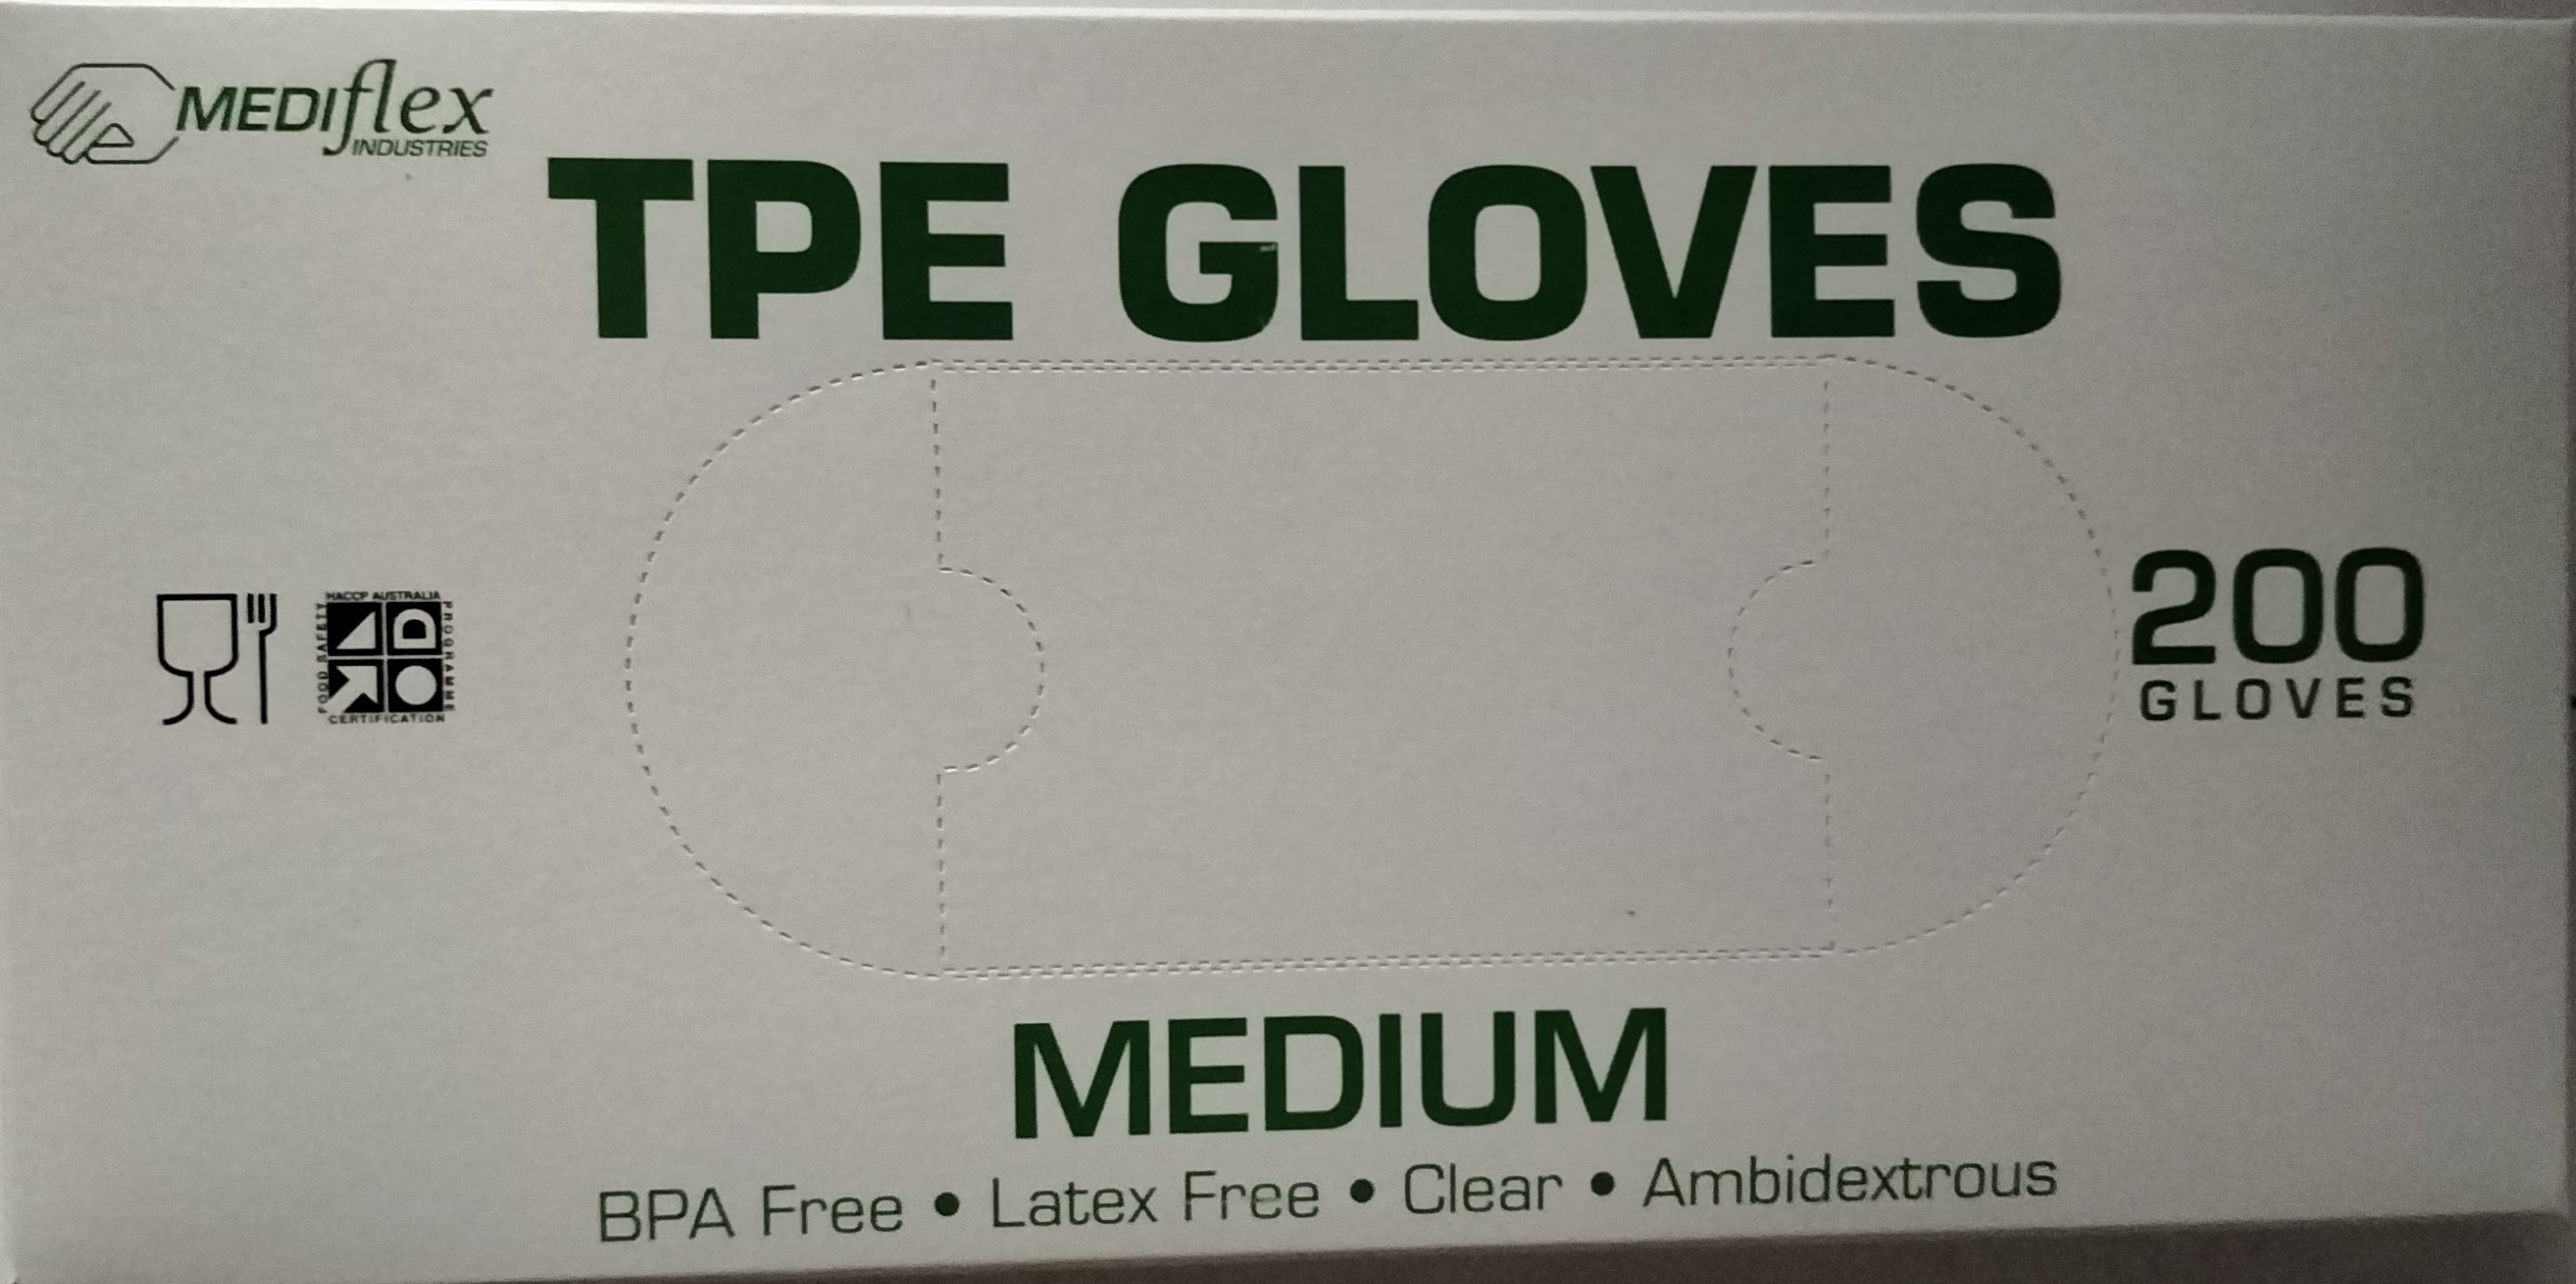 Thermoplastic Elastic Gloves Mediflex Medium Ctn (10 x 200)